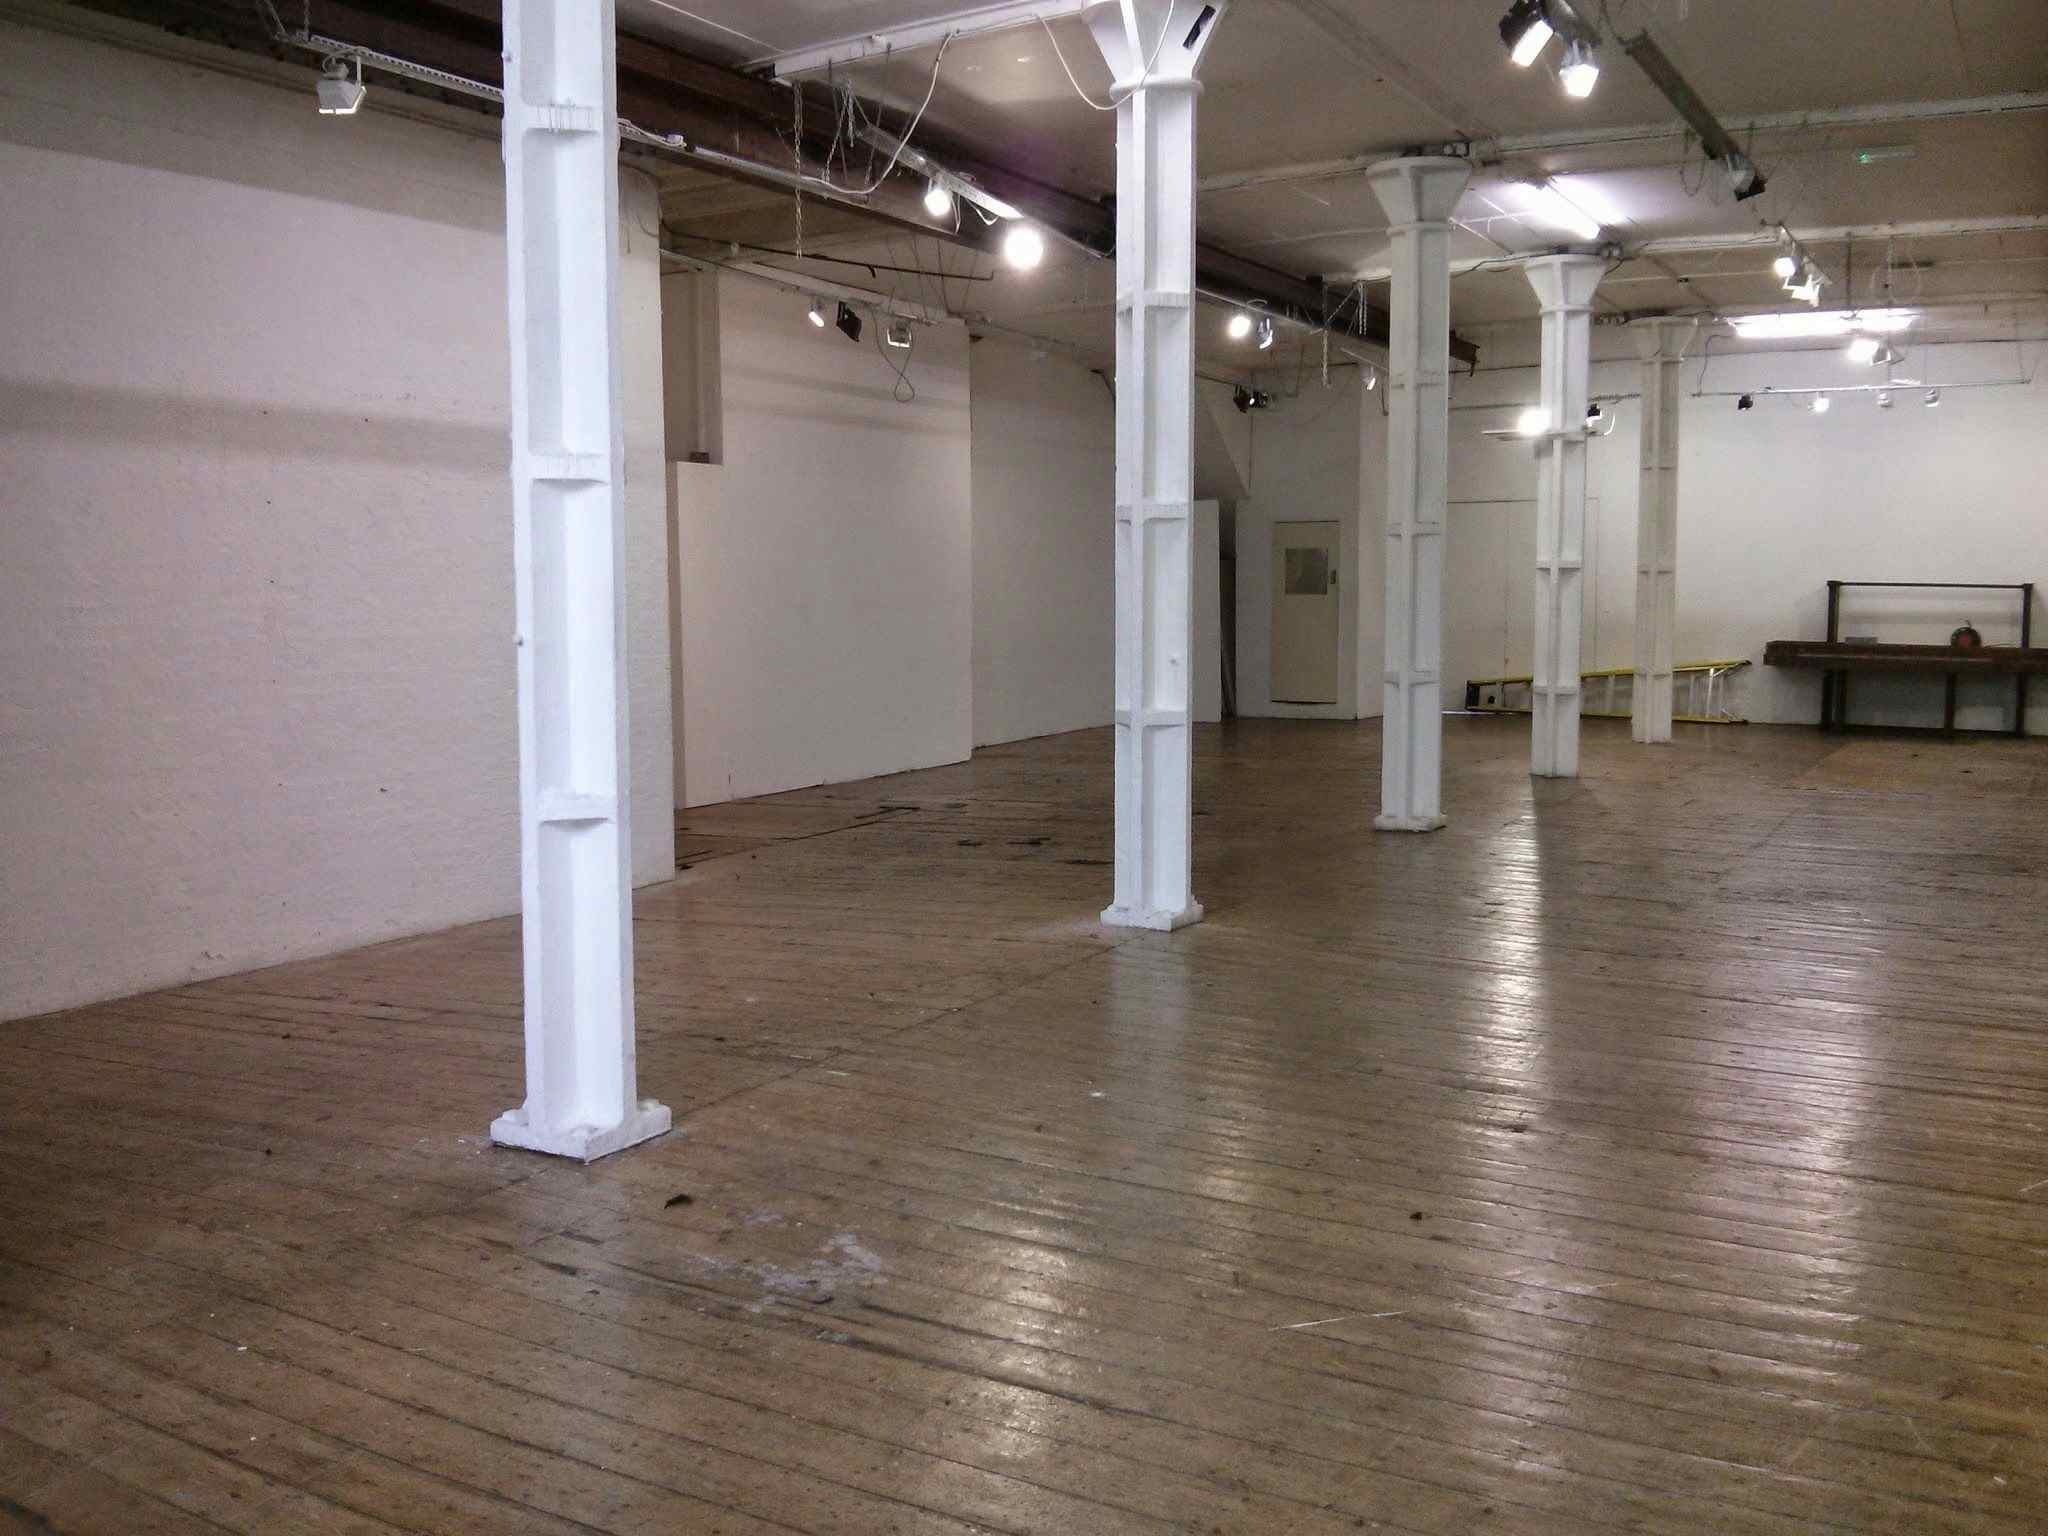 Ground Floor Gallery, Candid Arts Trust